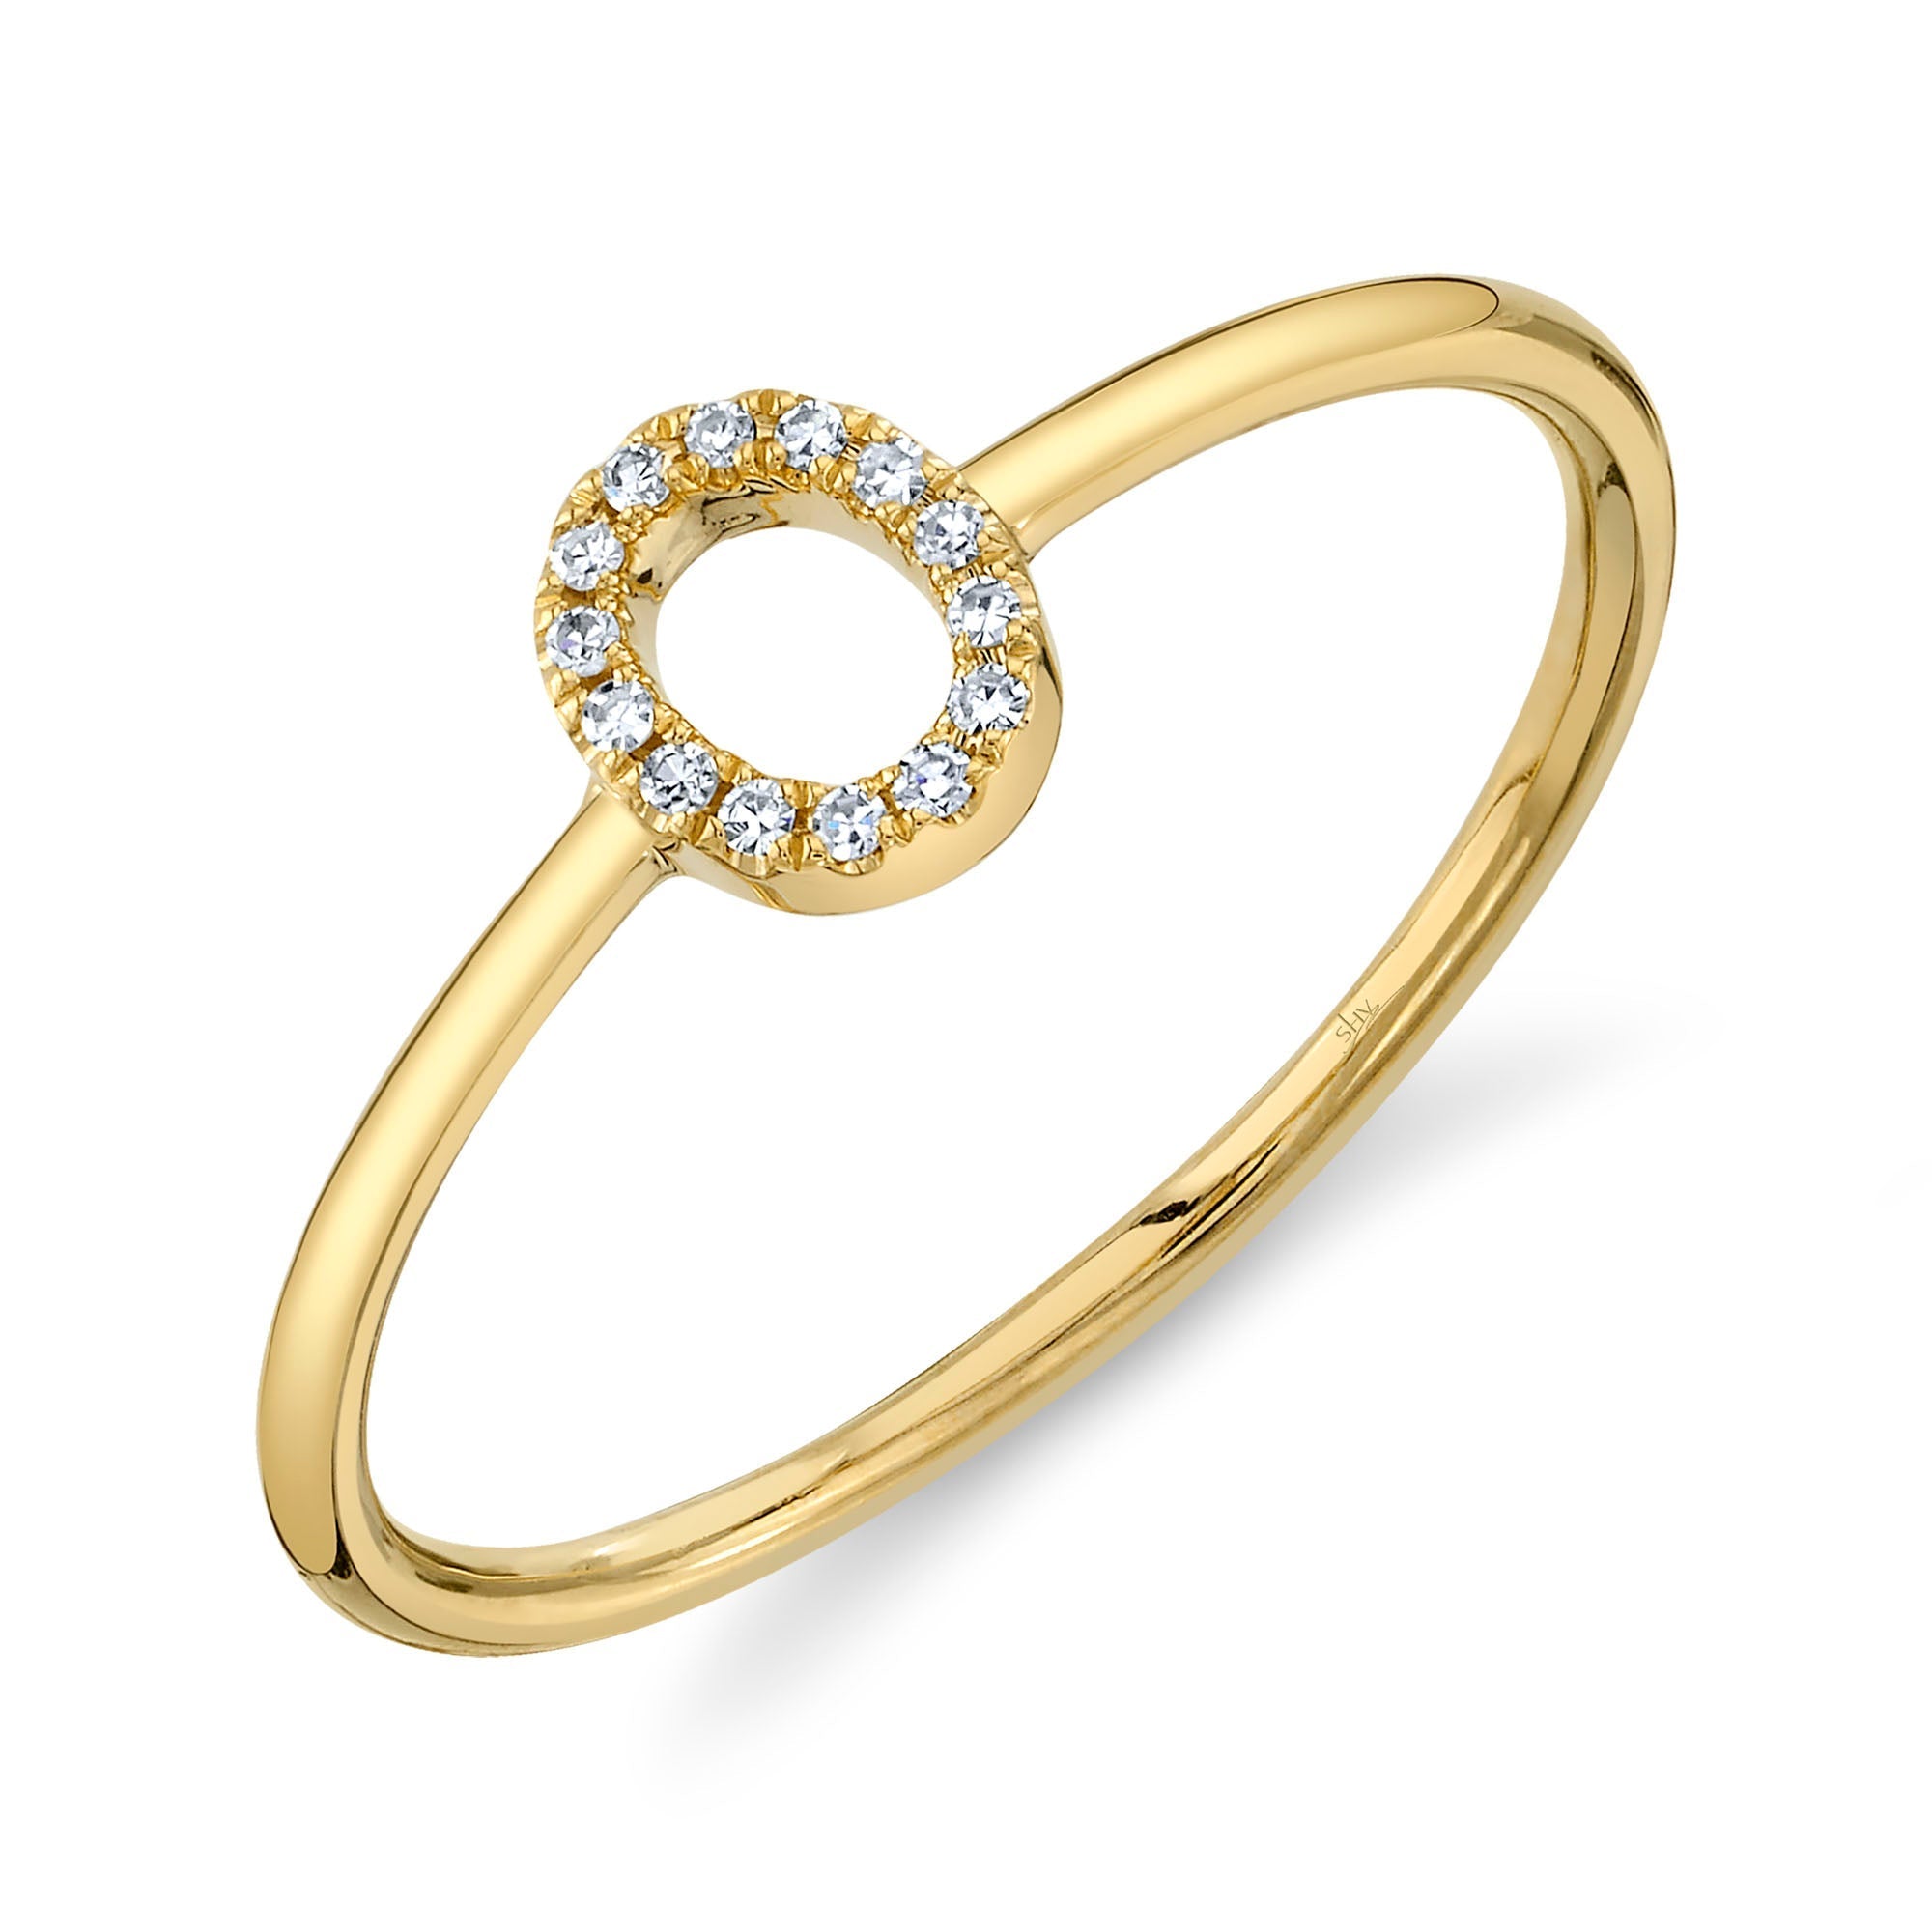 Gents Gold Ring | Men Engagement Ring | Senco Gold